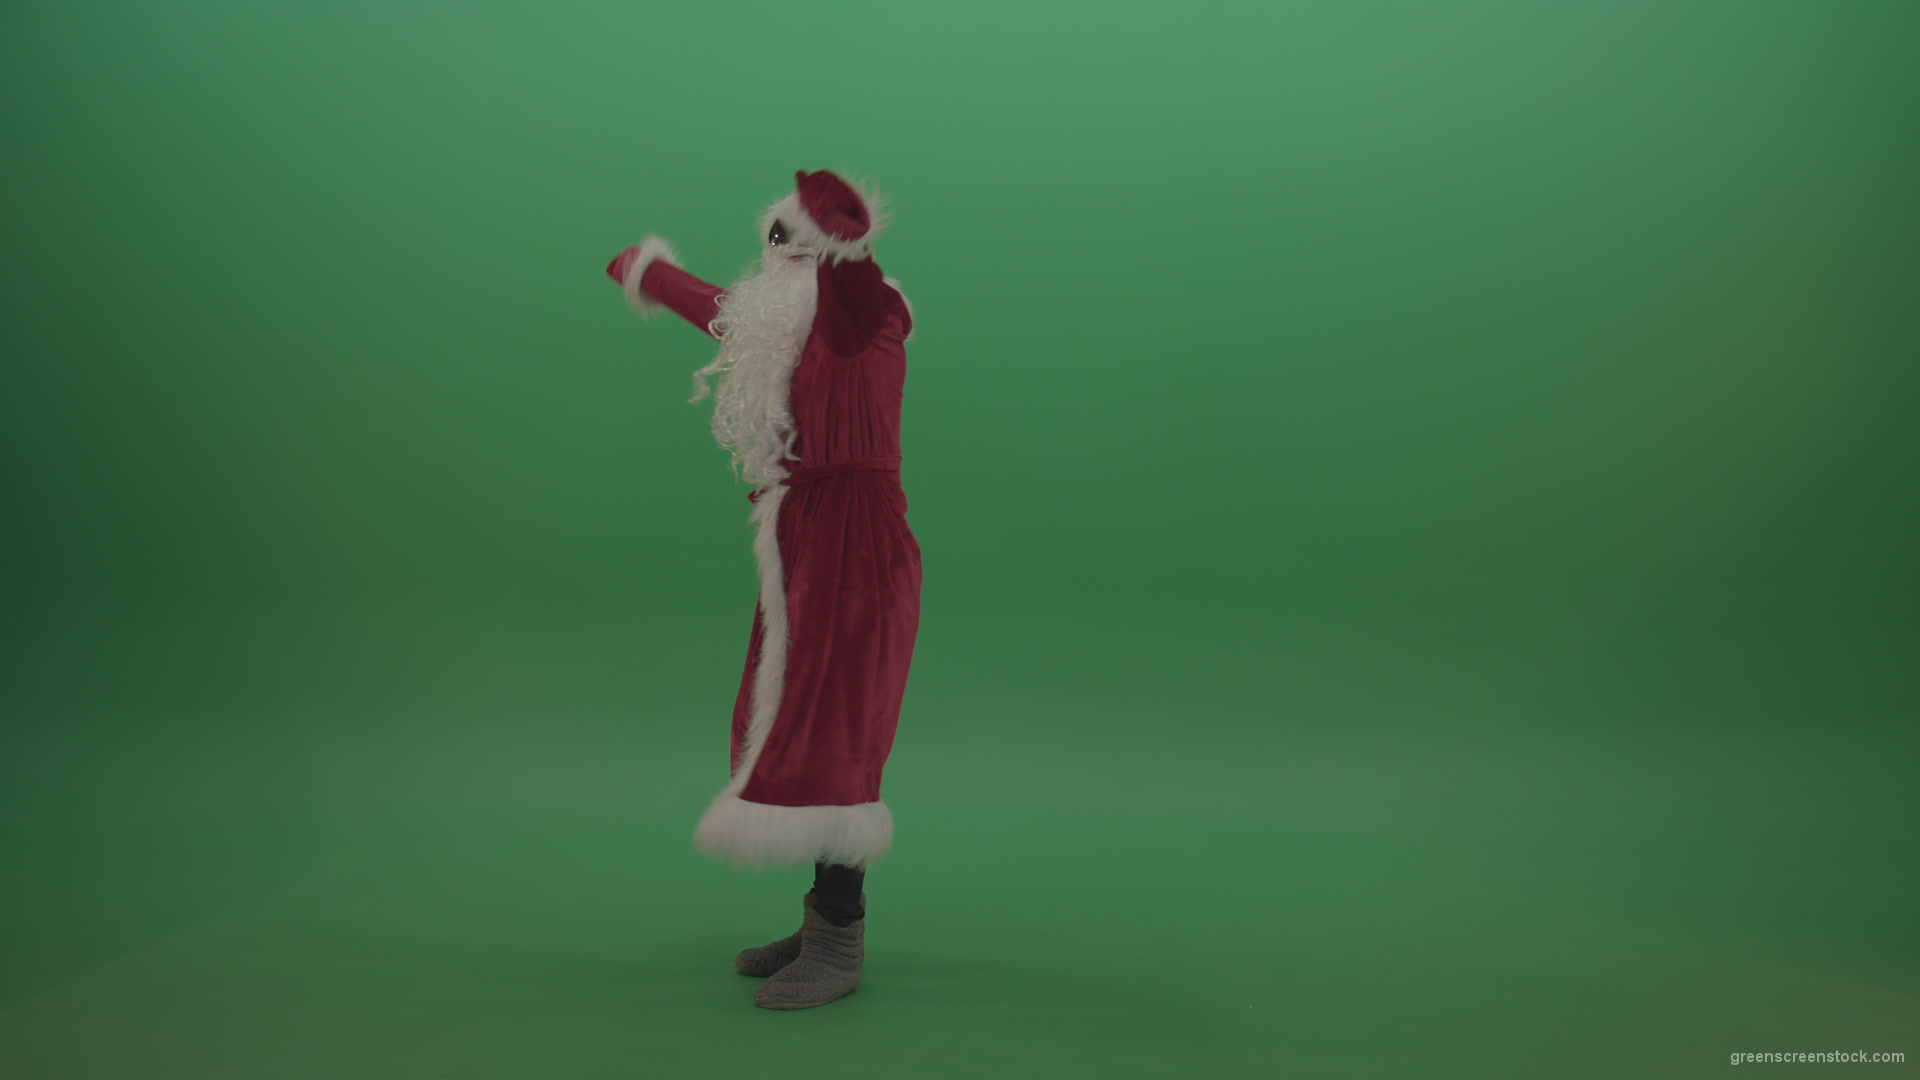 Santa-in-black-glasses-shows-his-dance-skills-over-chromakey-background_002 Green Screen Stock